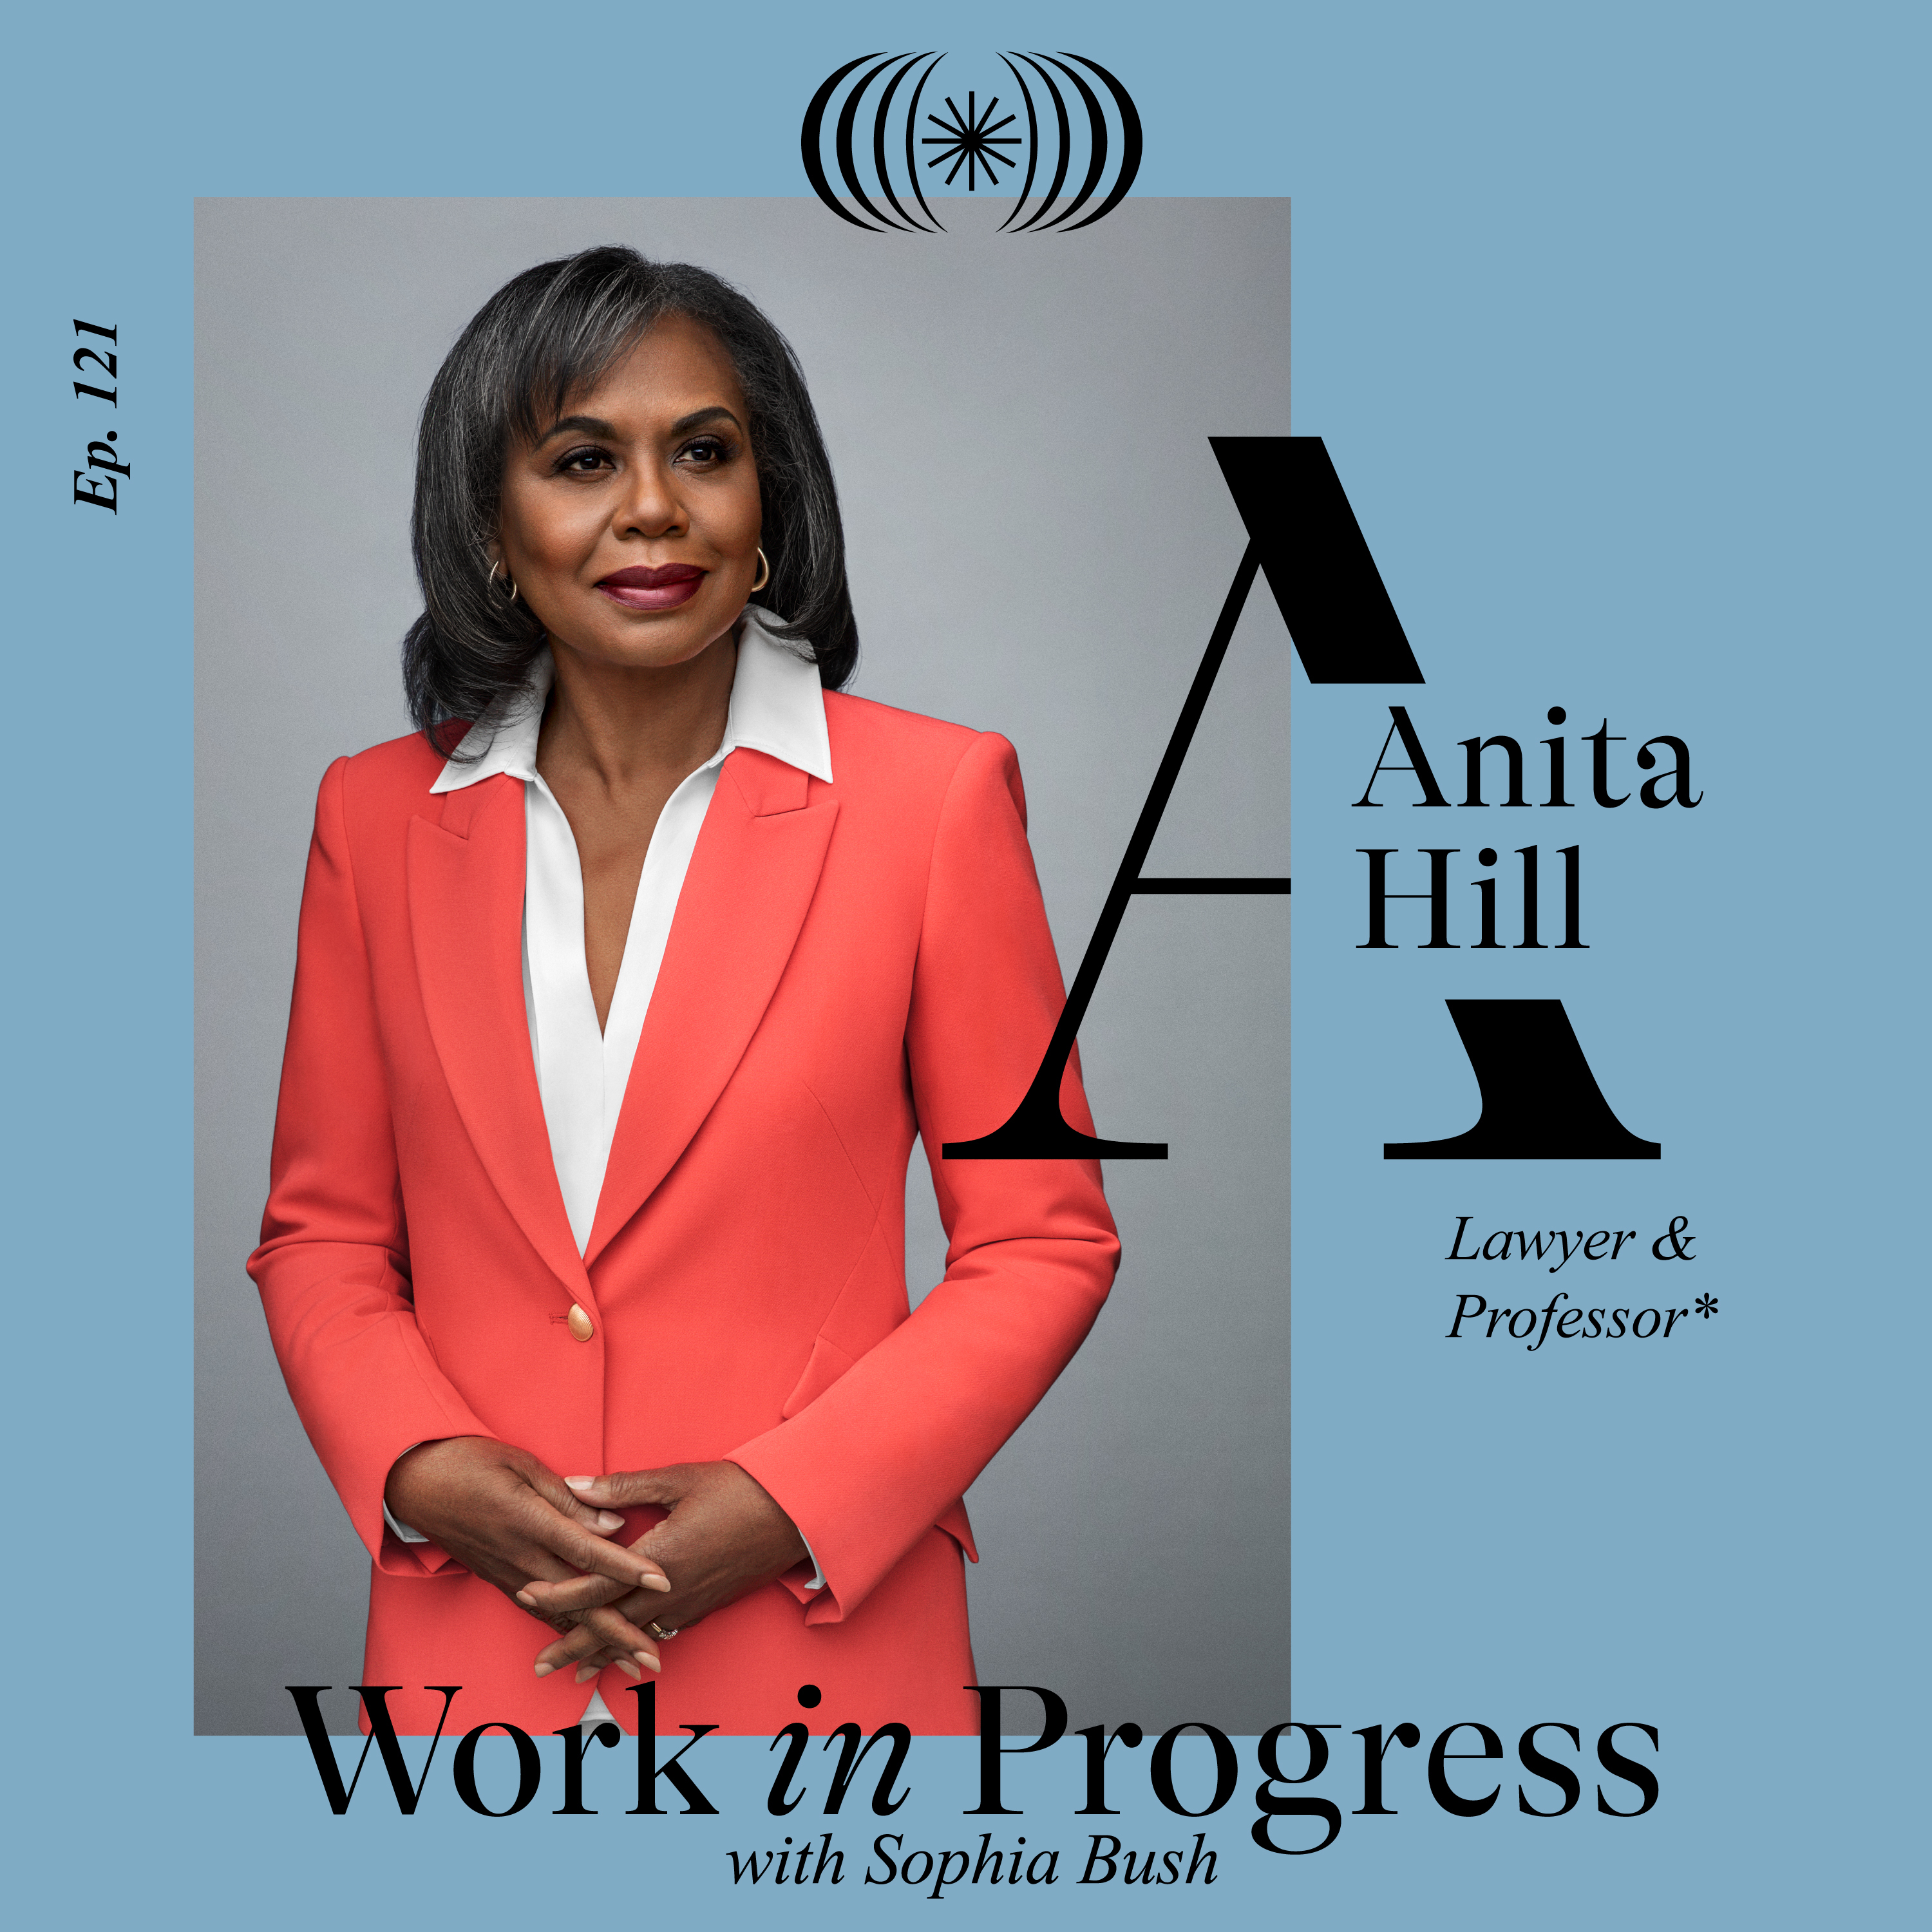 Anita Hill